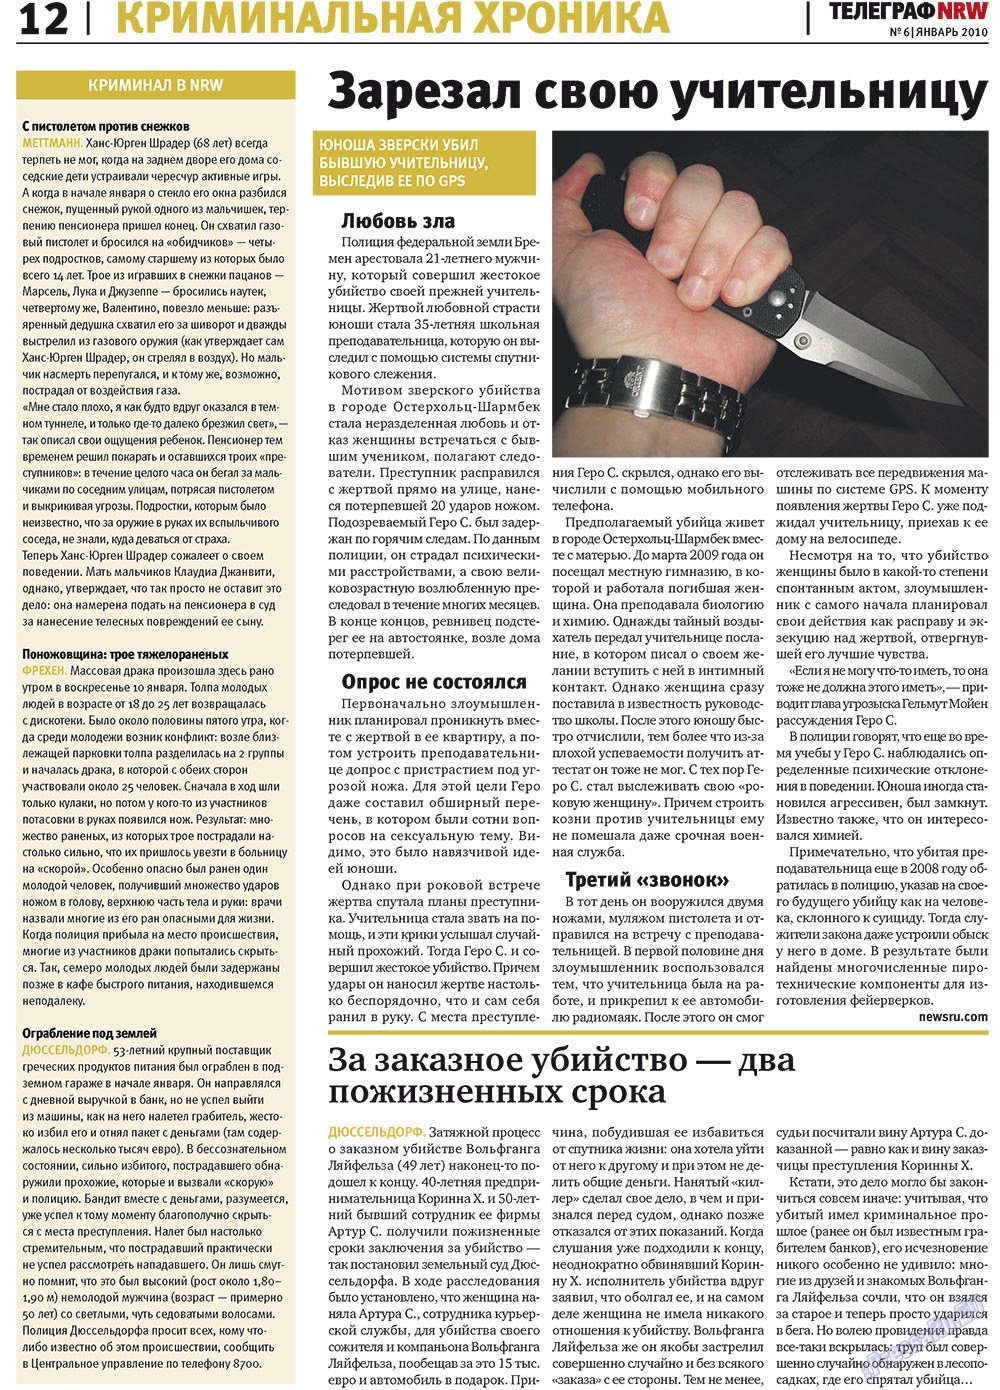 Телеграф NRW, газета. 2010 №1 стр.12